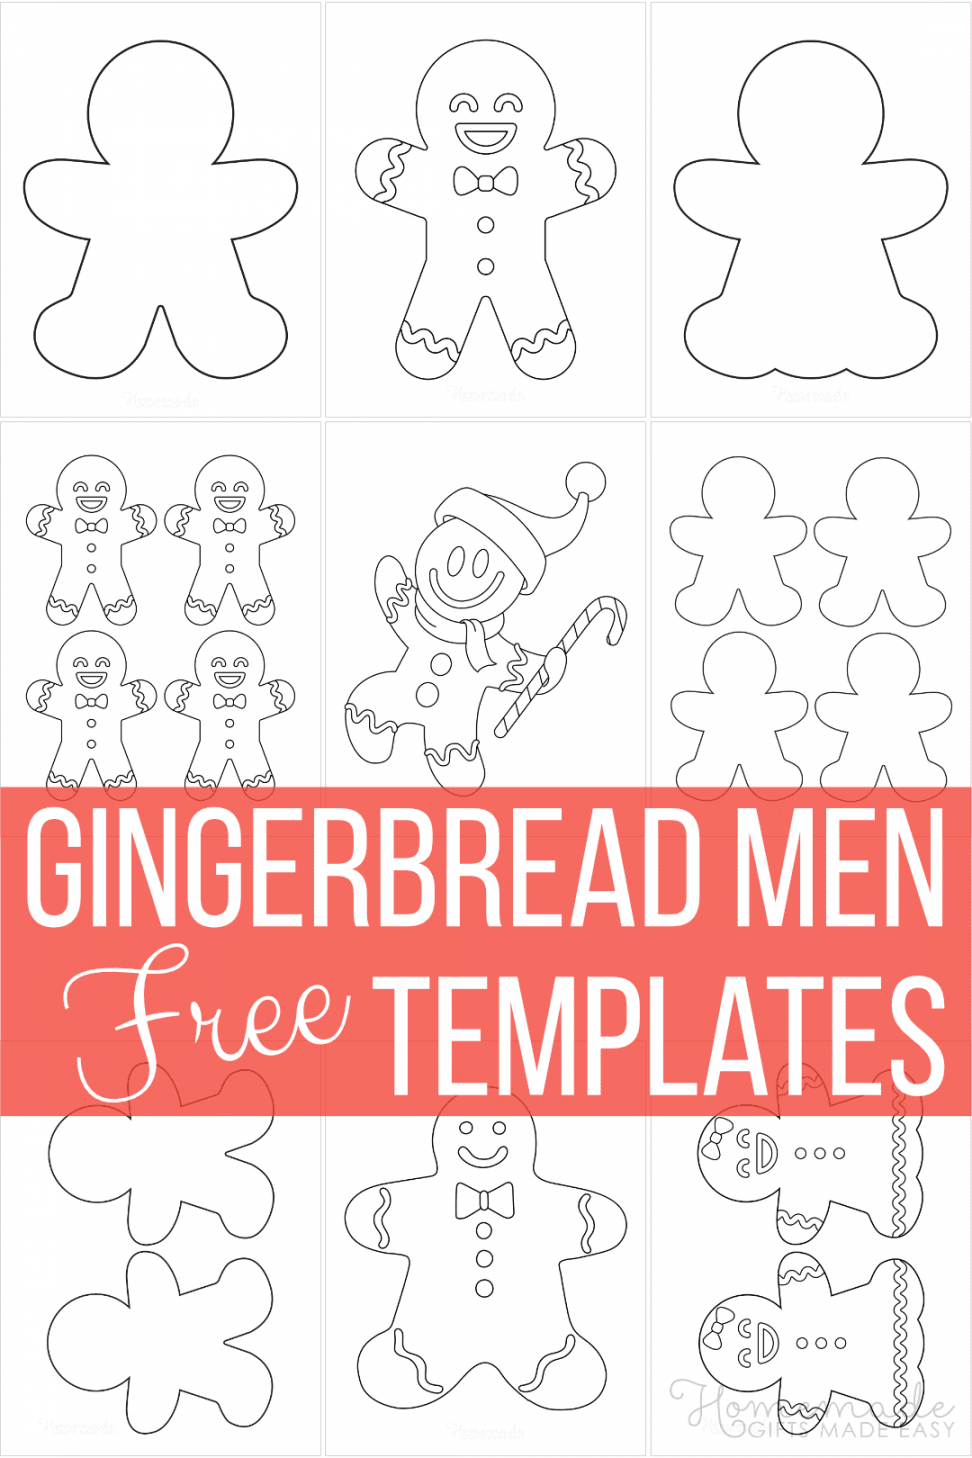 Free Printable Gingerbread Man Templates & Coloring Pages - FREE Printables - Gingerbread Free Printable